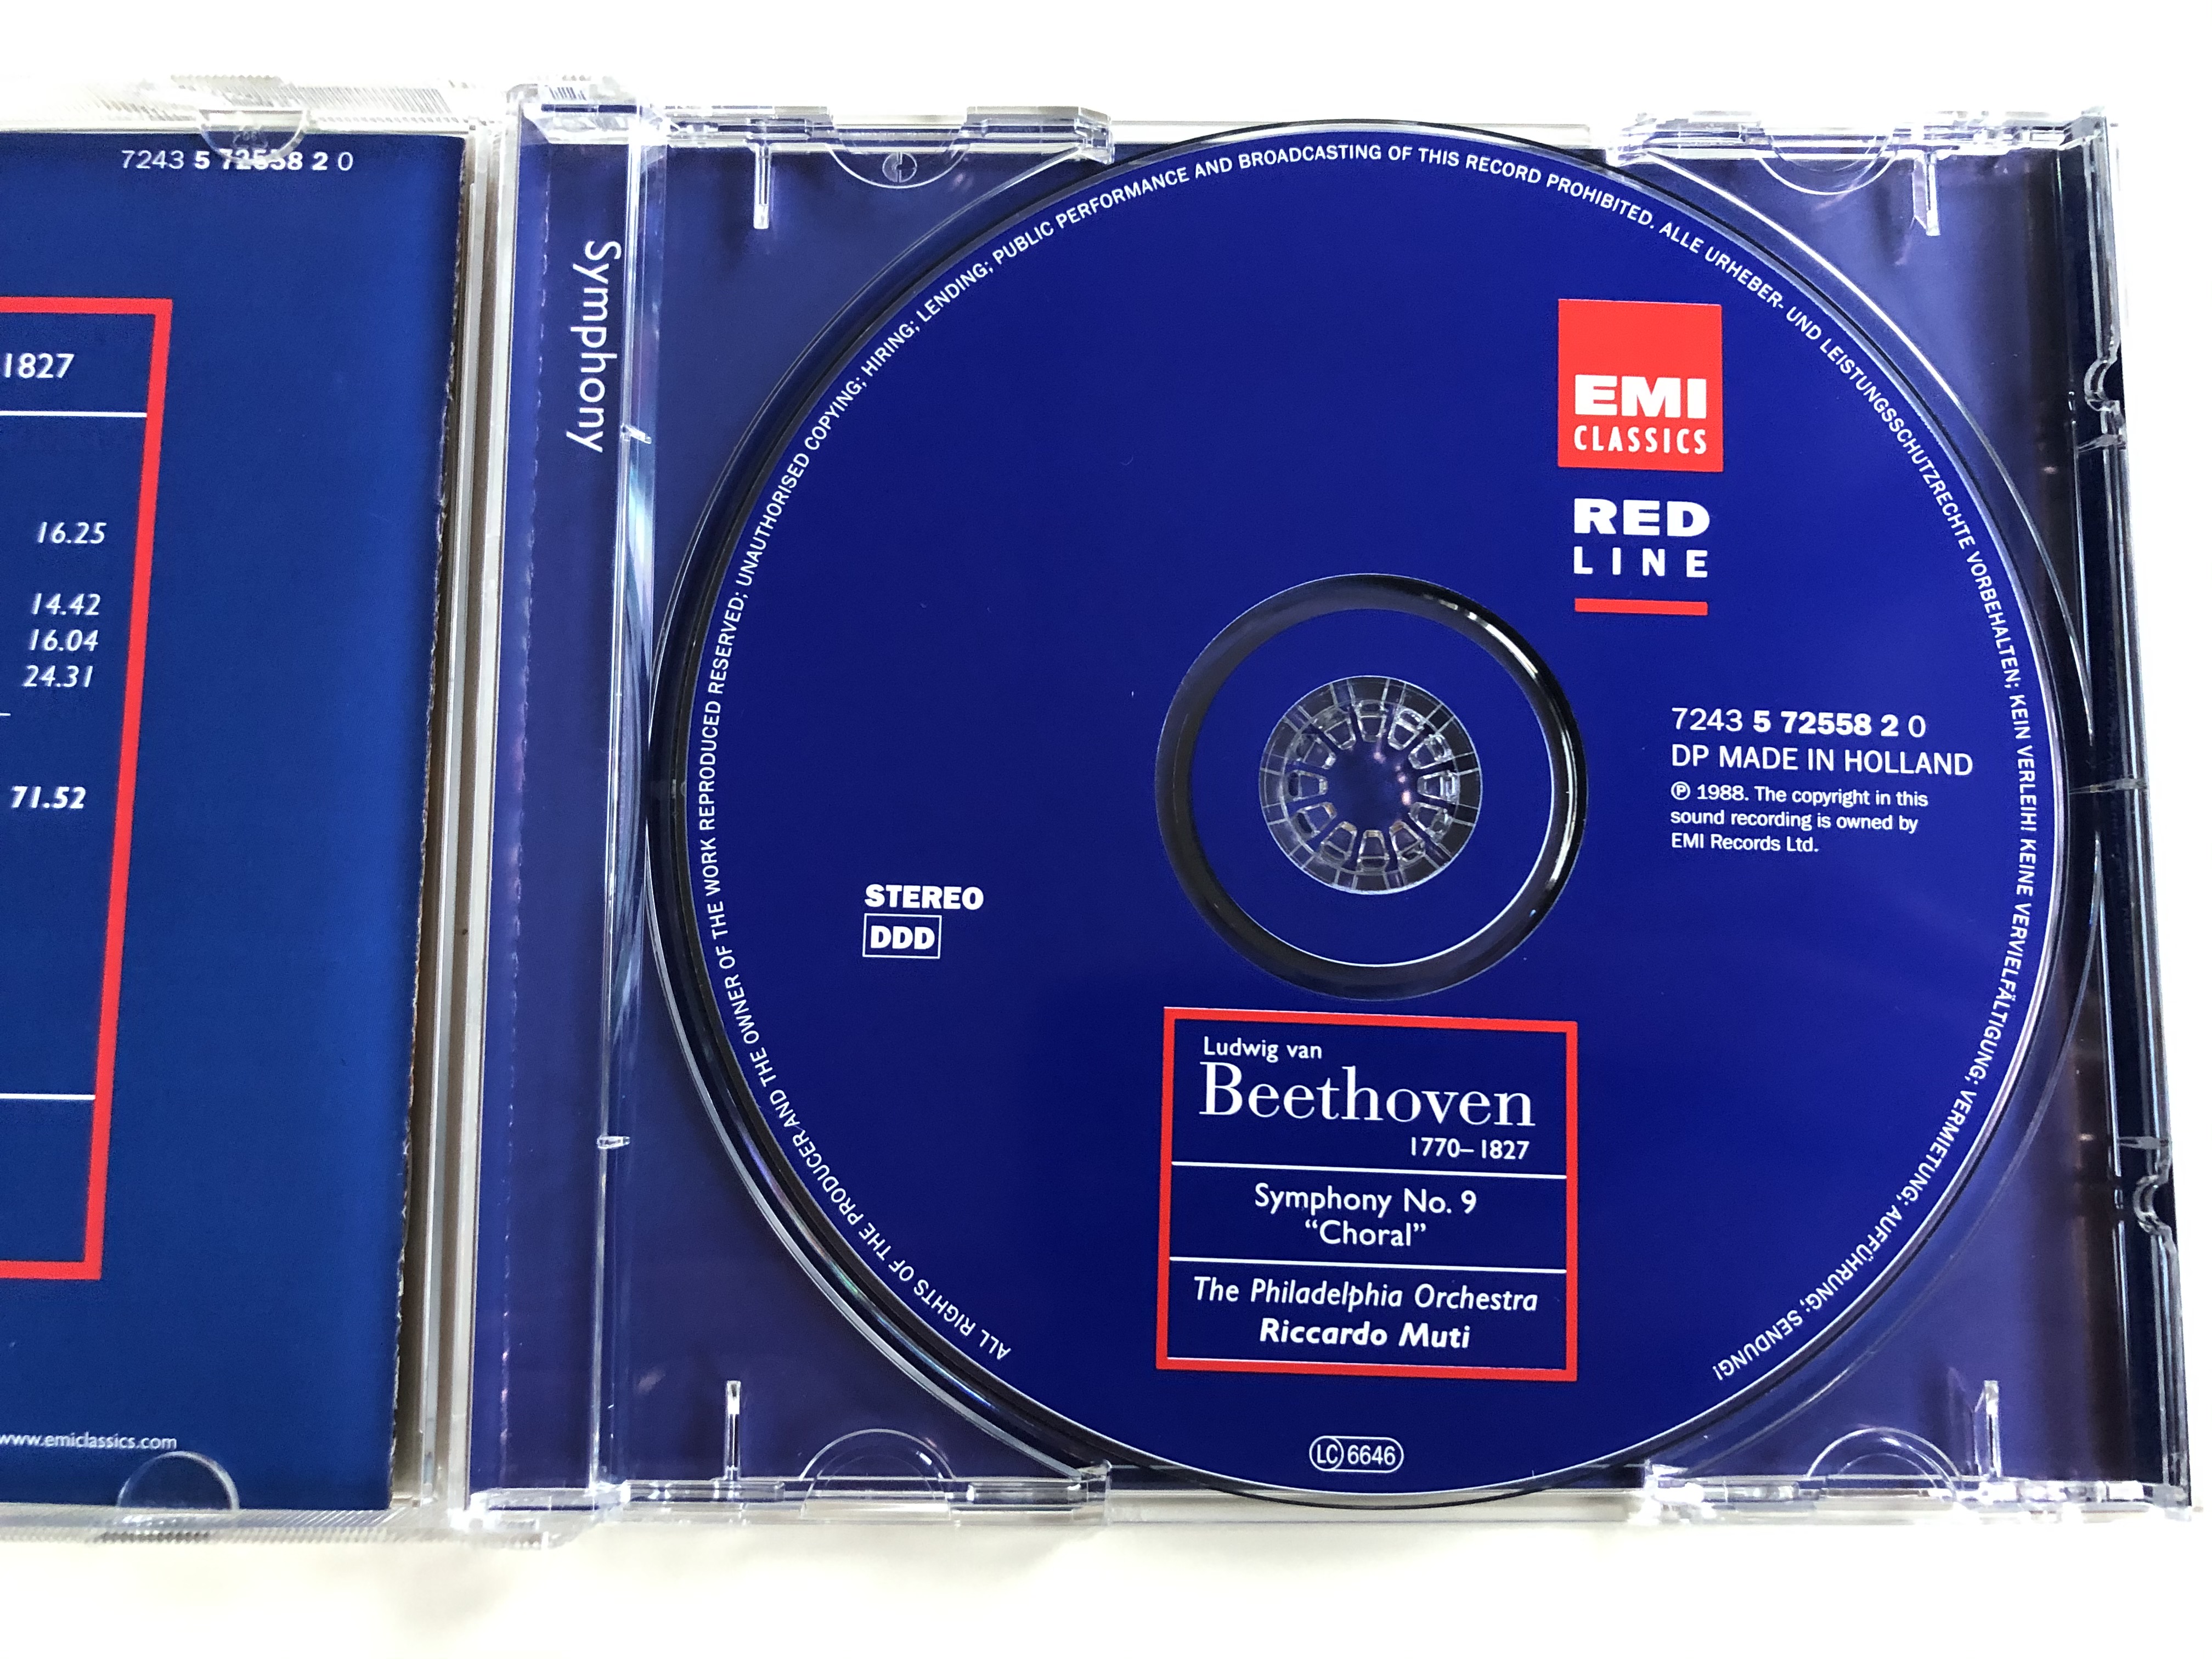 ludwig-van-beethoven-1770-1827-symphony-no.-9-choral-the-philadelphia-orchestra-riccardo-muti-emi-classics-audio-cd-1998-stereo-724357255820-6-.jpg